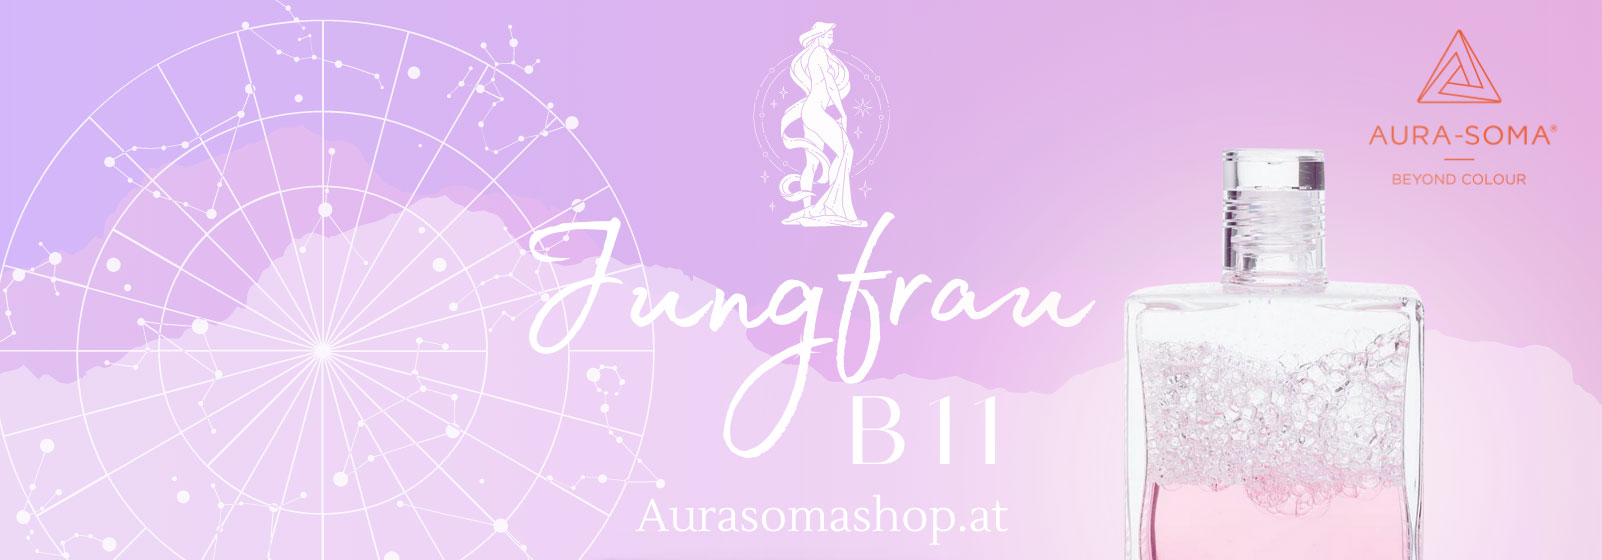 Jungfrau_Banner